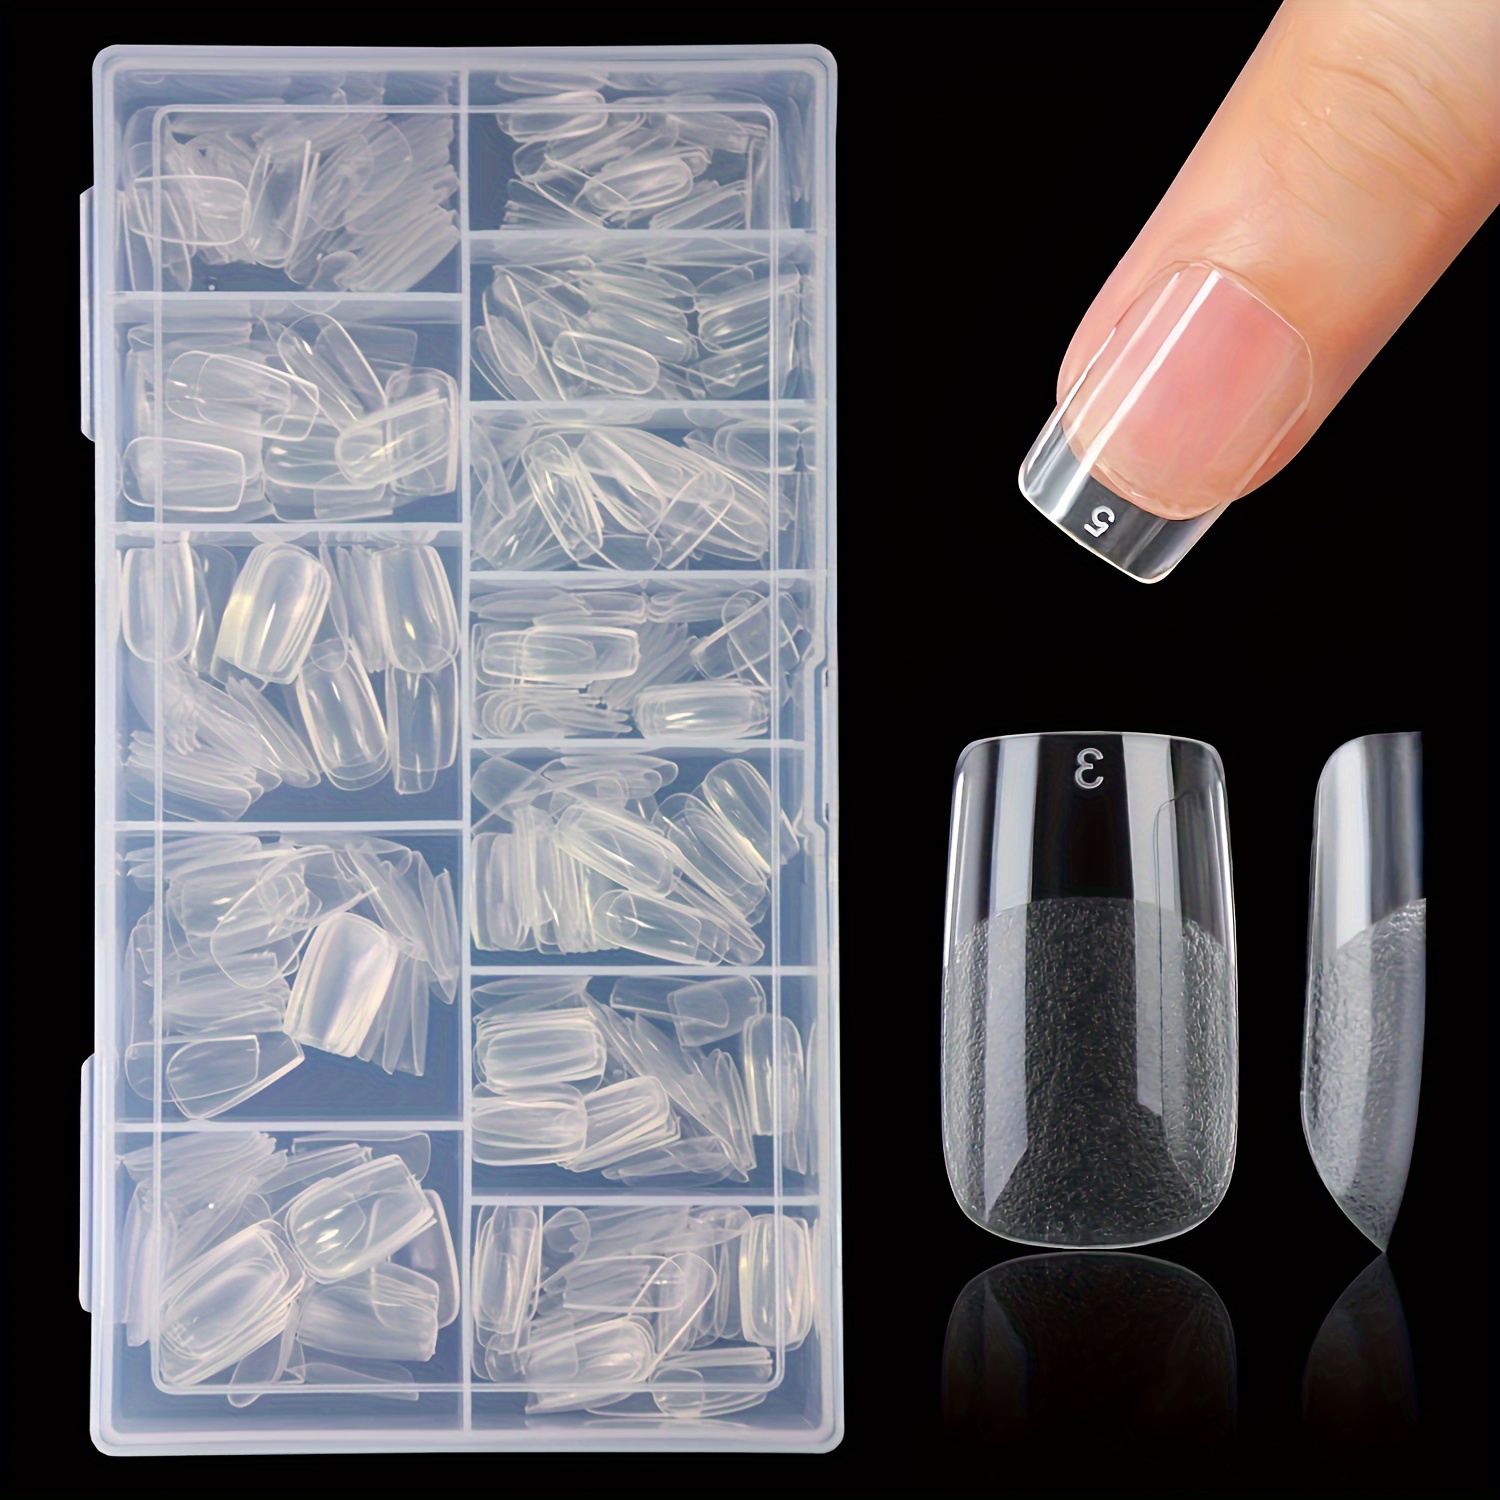 

500pcs Matte Short Square Nail Tips Set Transparent Soft Gel False Nails Suitable For Women Diy Fake Nails